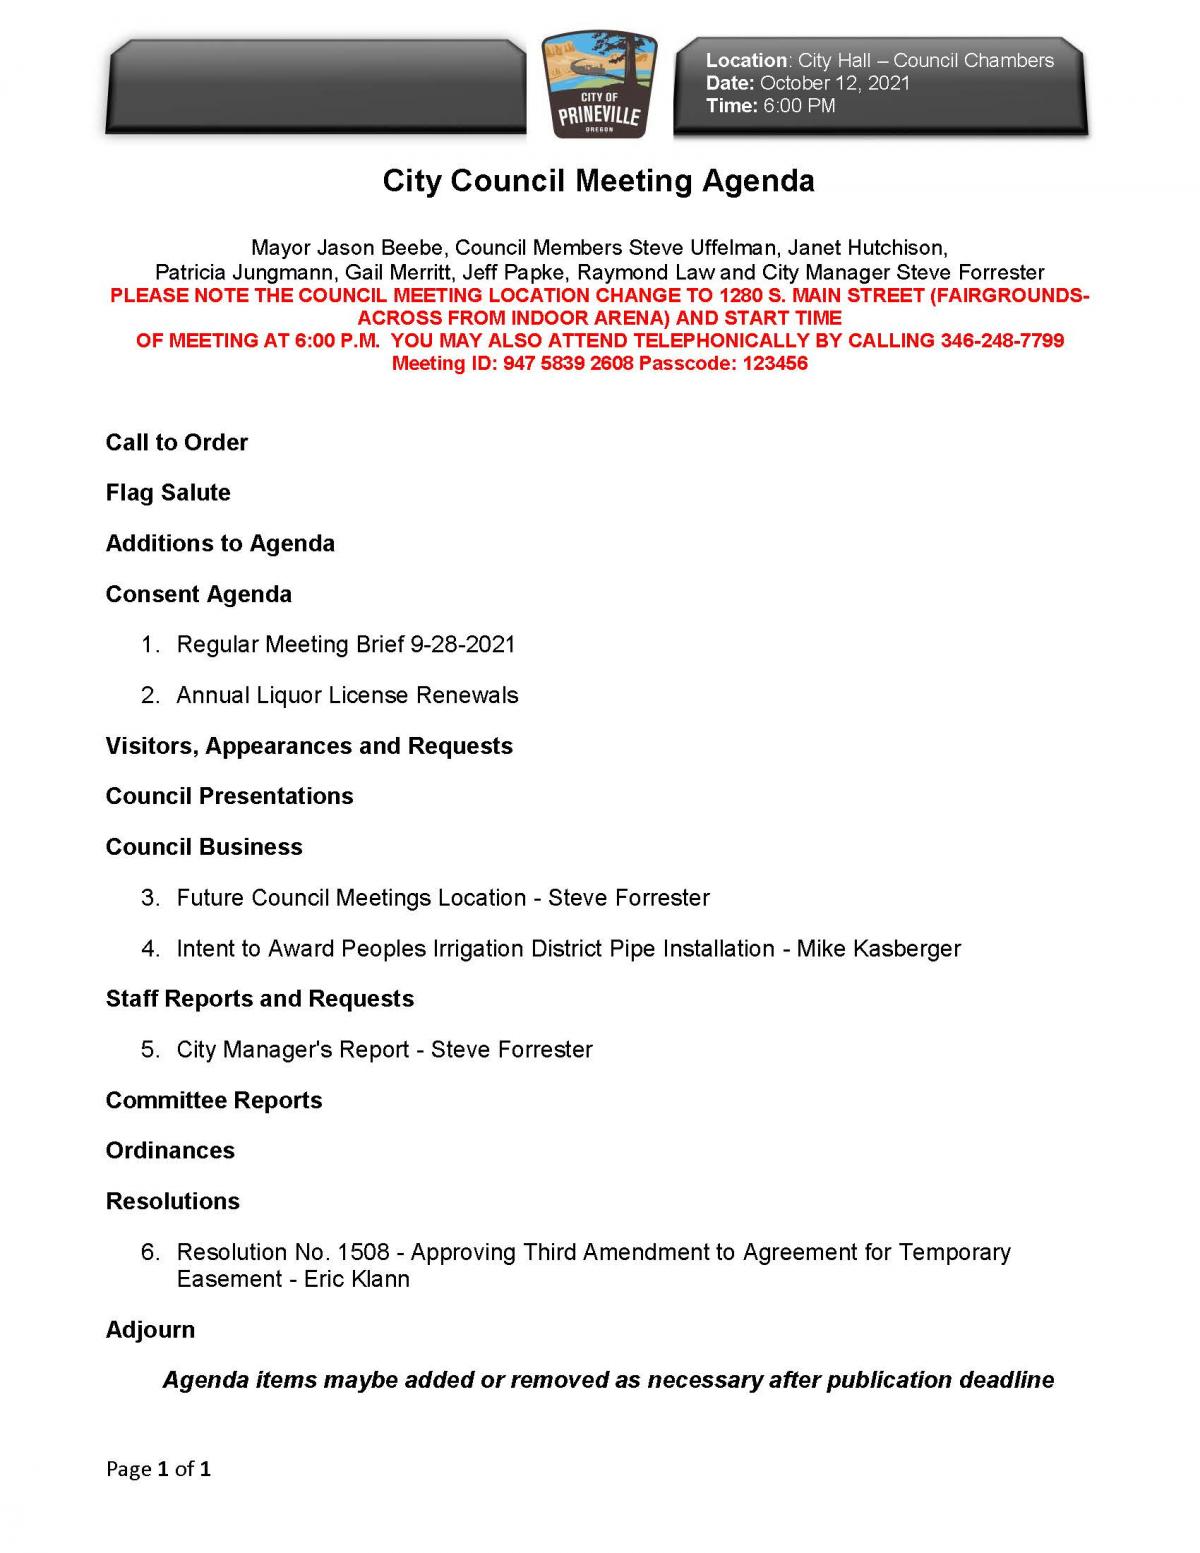 Council Agenda 10-12-2021